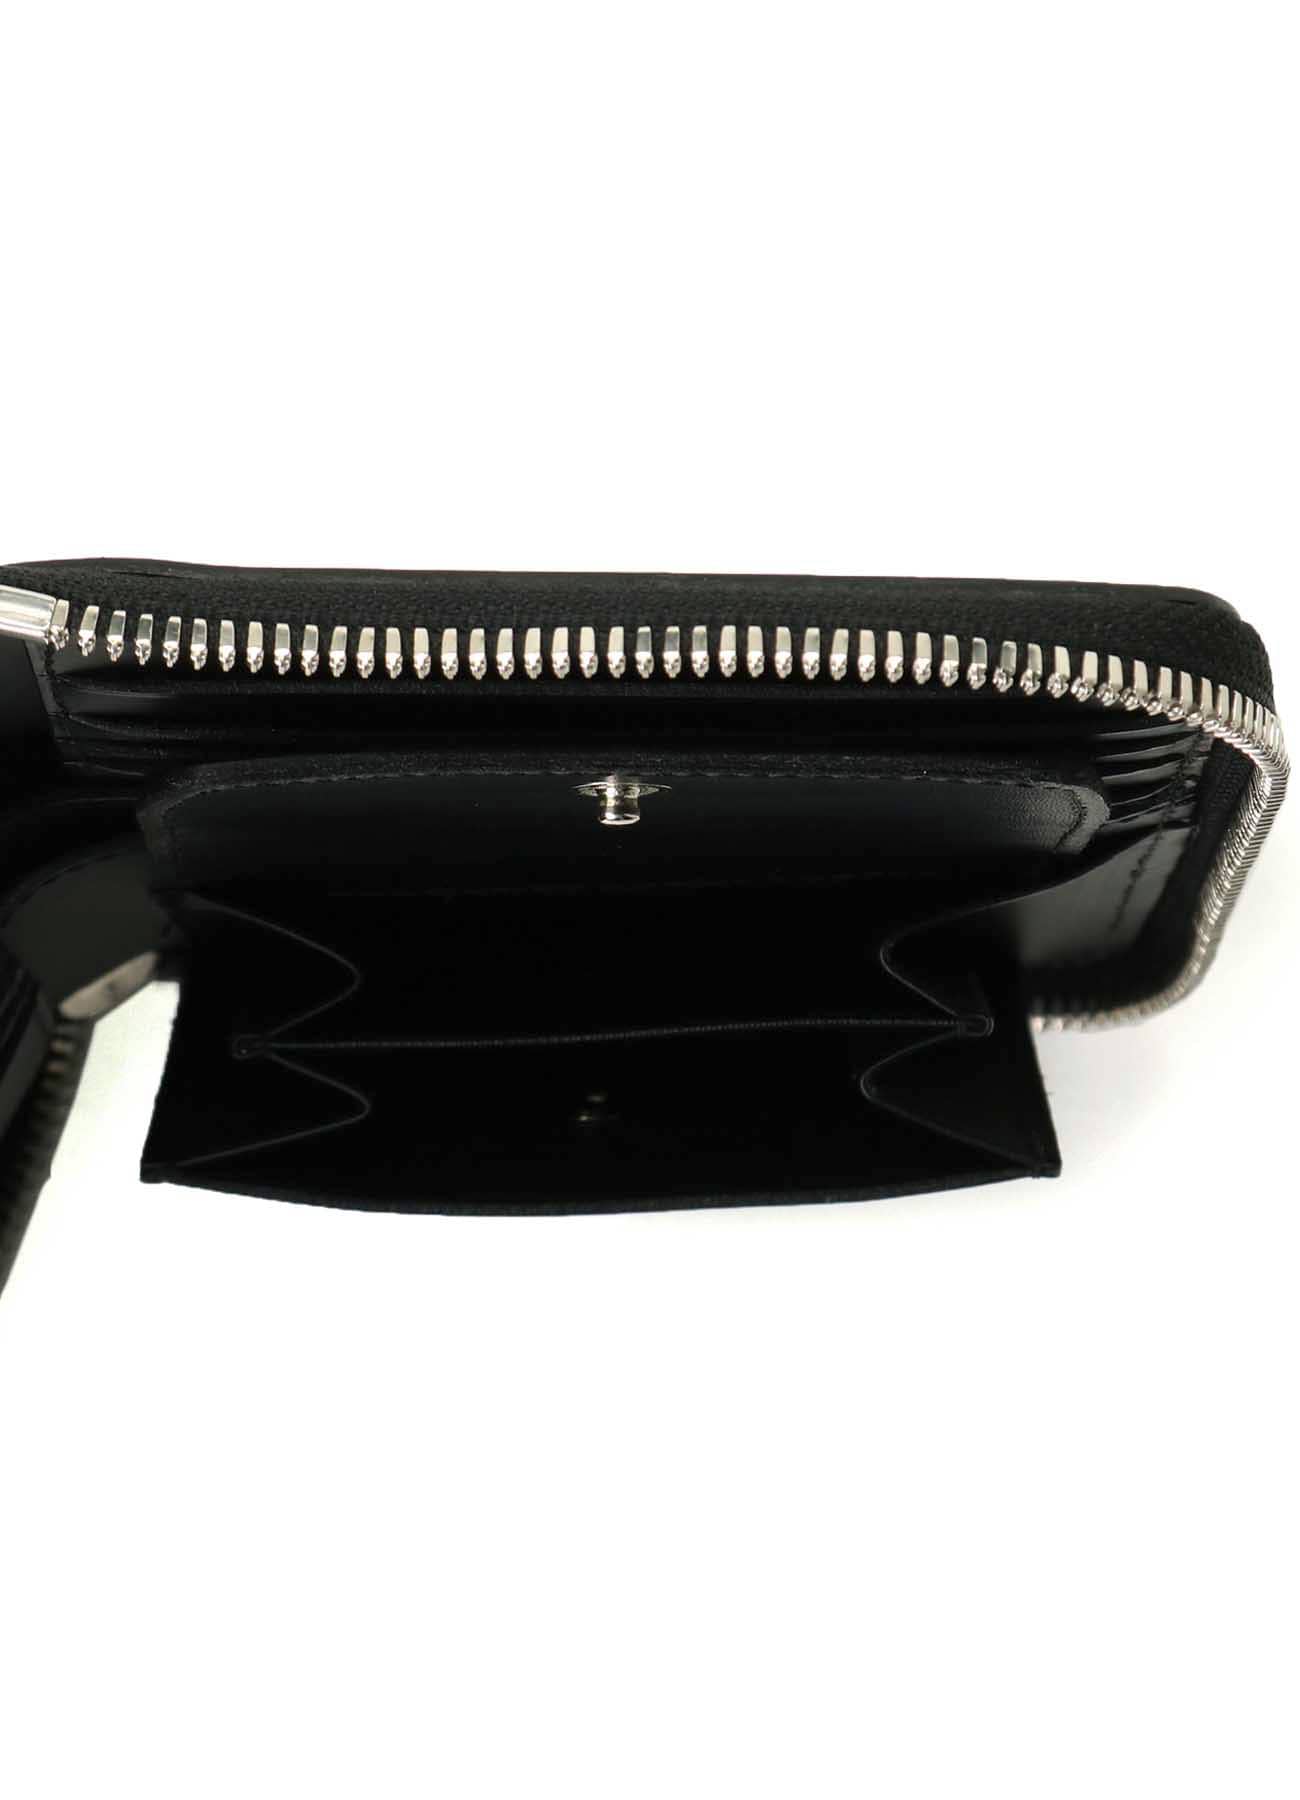 COACH Swinger Mini Leather Handbag | Bloomingdale's